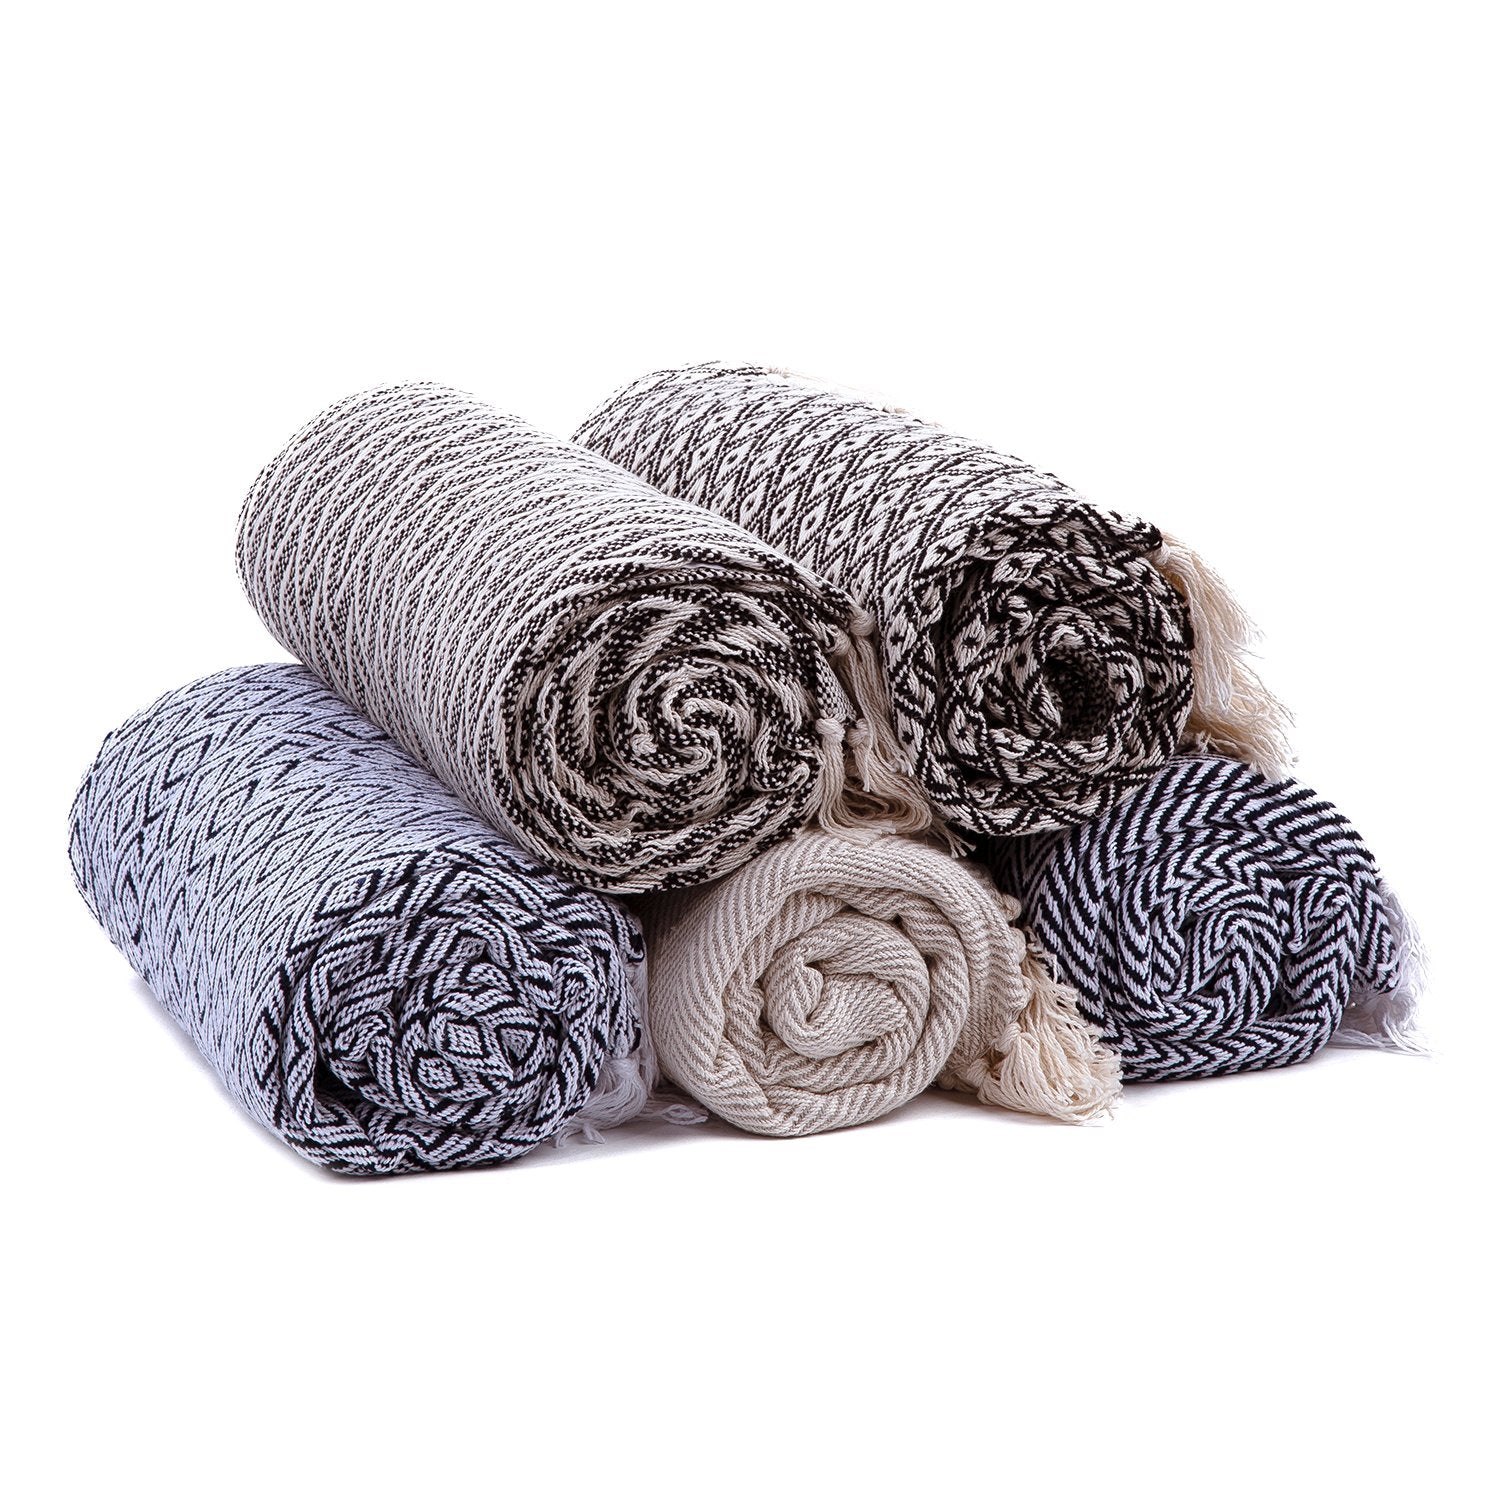 Throw Blanket - 100% Cotton - 50 x 60 – Americanflat